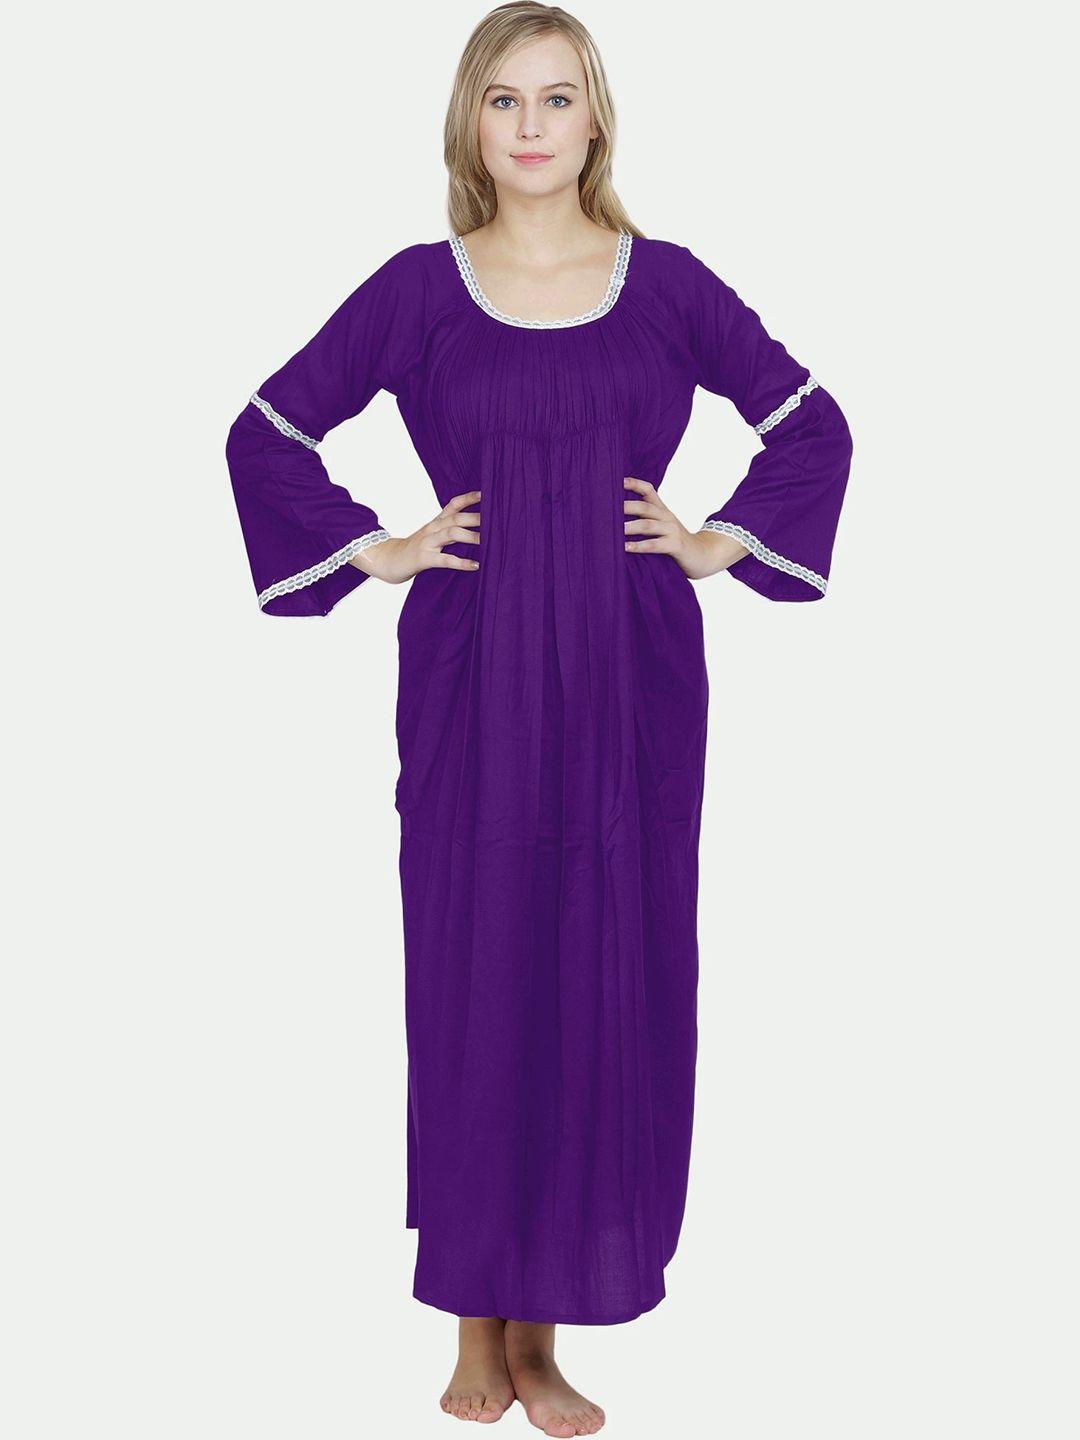 patrorna women purple solid round neck maxi dress